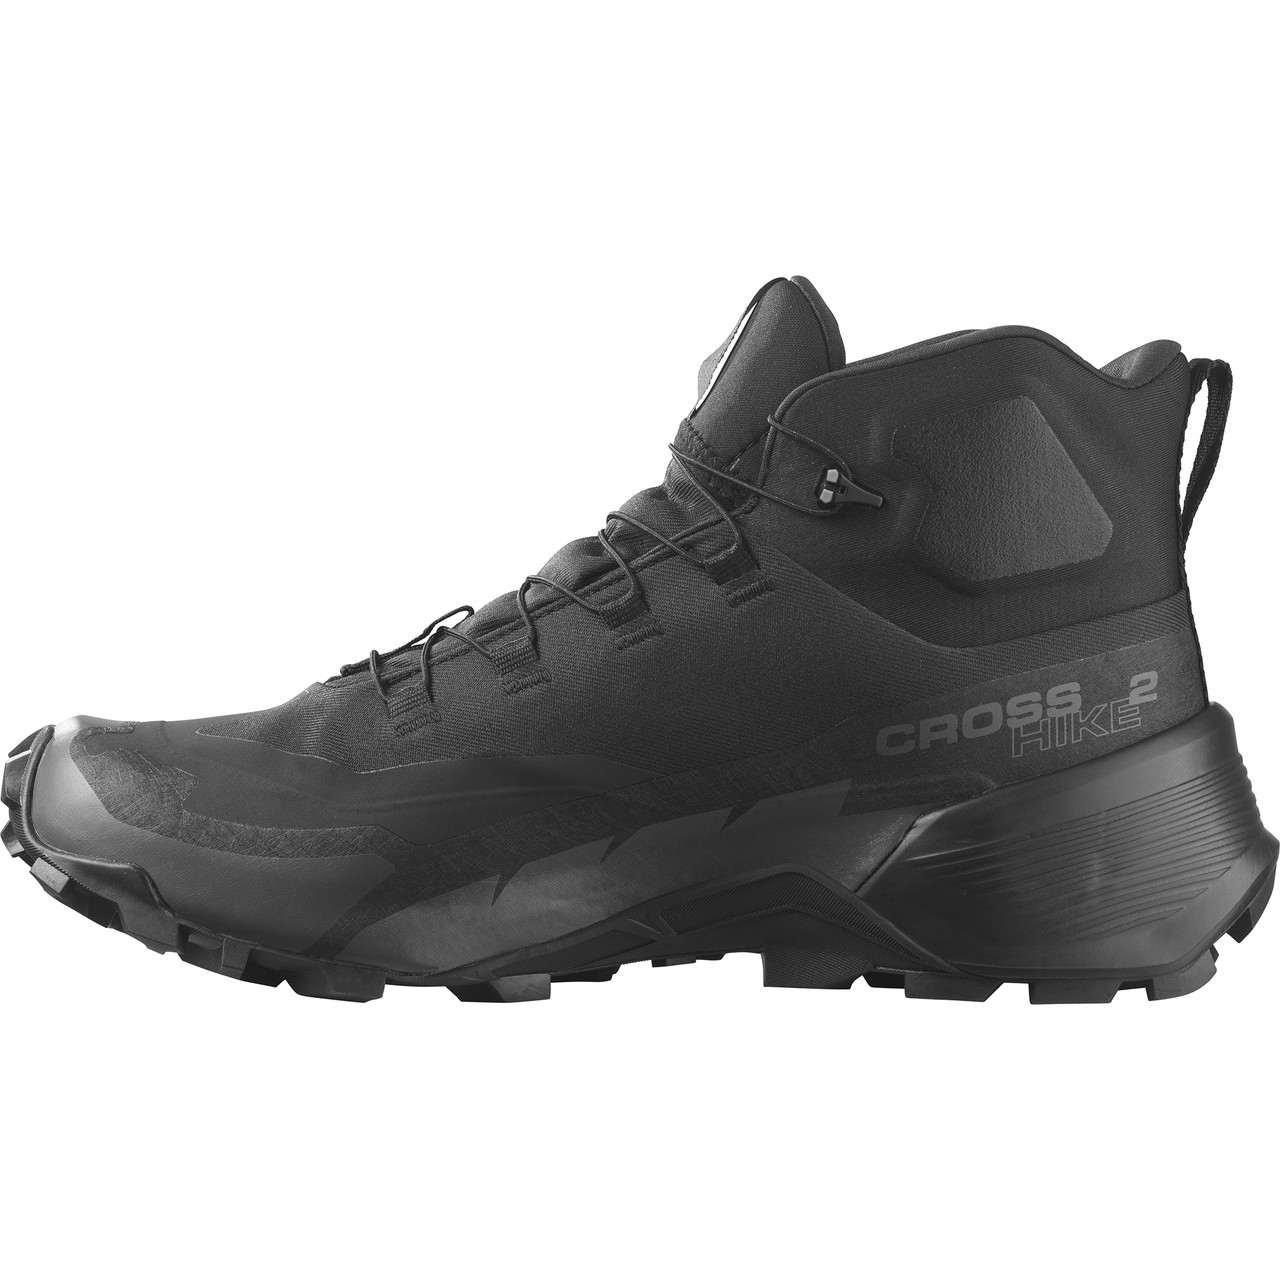 Cross Hike 2 Mid Gore-Tex Light Trail Shoes Black/Black/Magnet